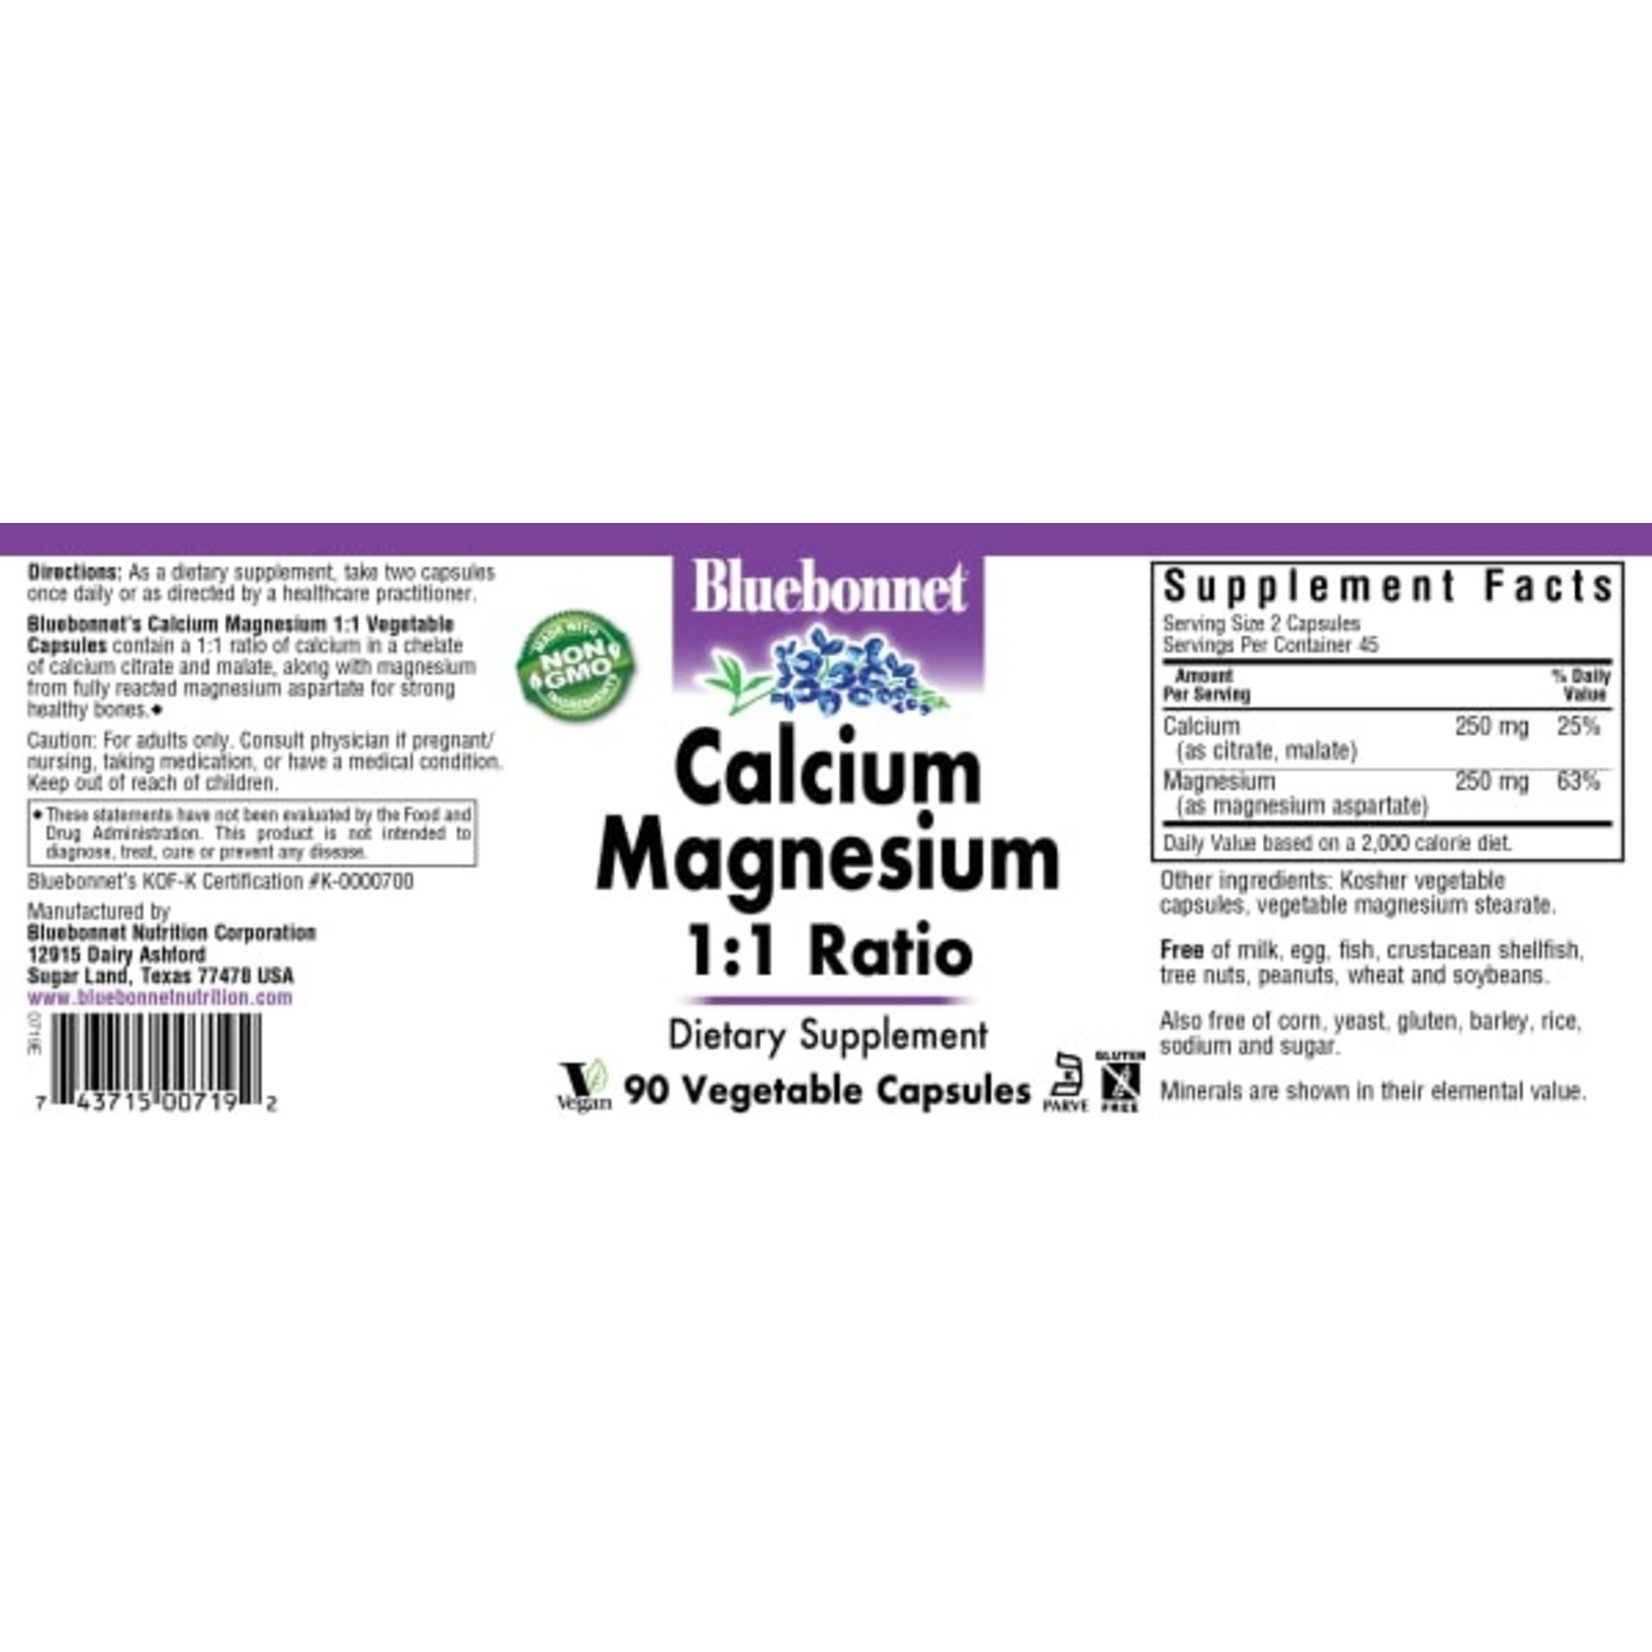 Bluebonnet Bluebonnet - Calcium Magnesium 1:1 Ratio - 90 Veg Capsules